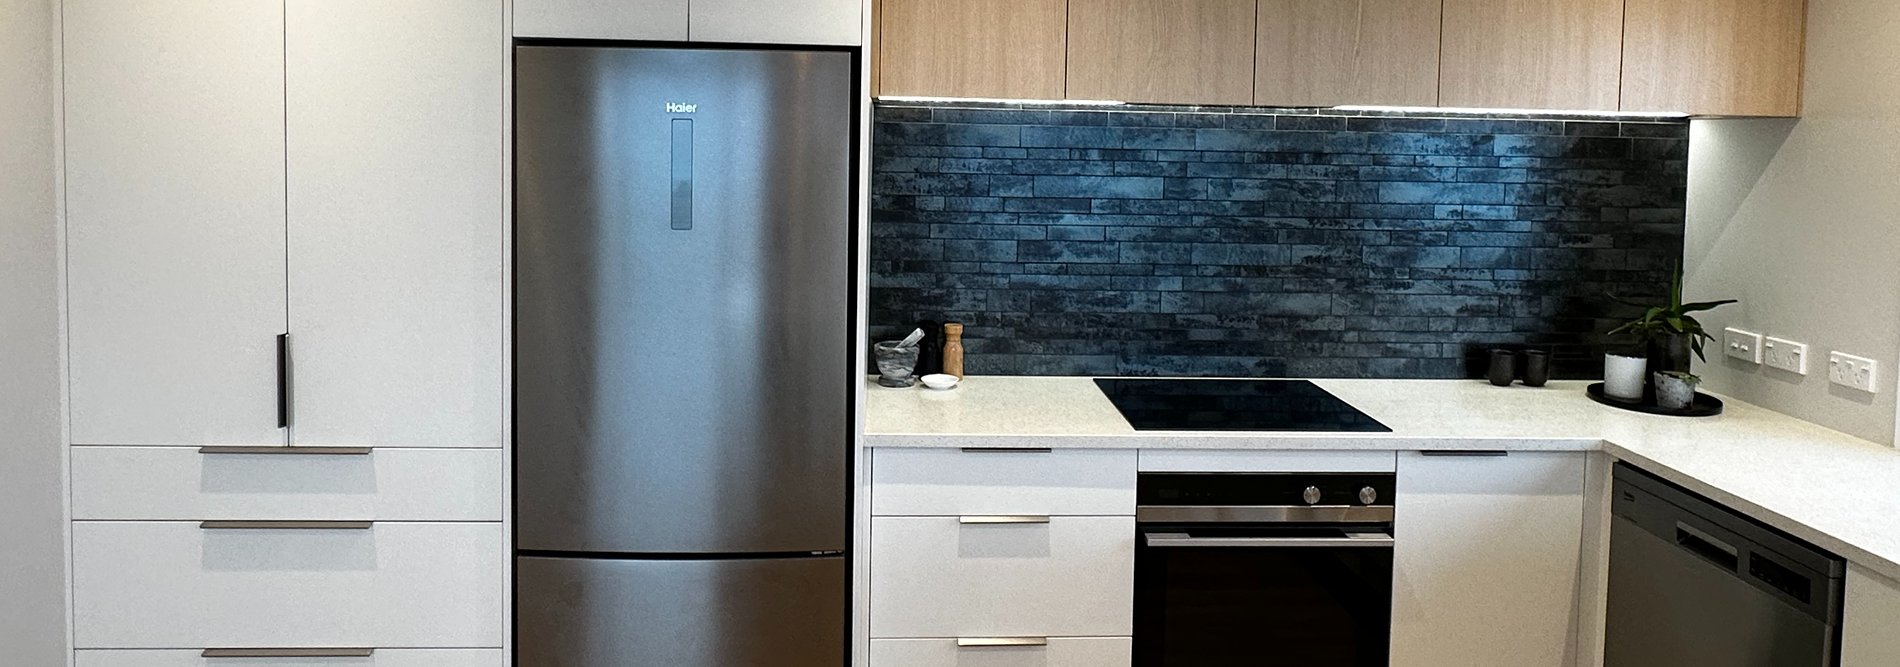 white and woodgrain kitchen with modern appliances